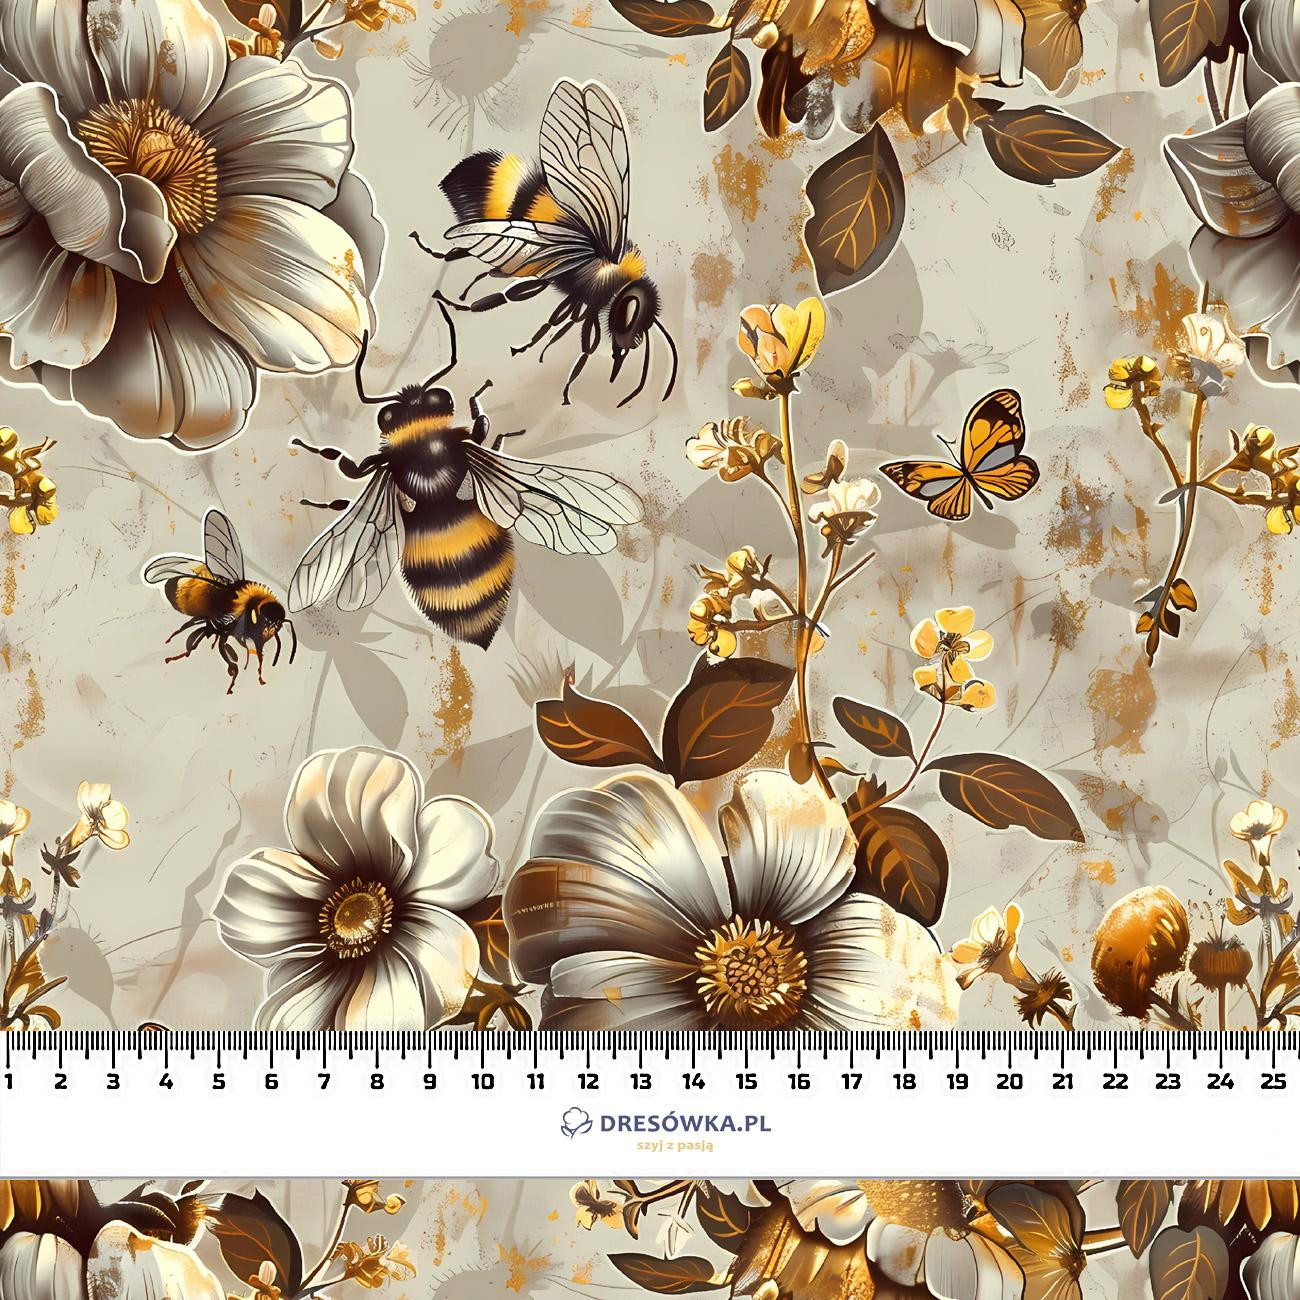 BEES & FLOWERS - Waterproof woven fabric